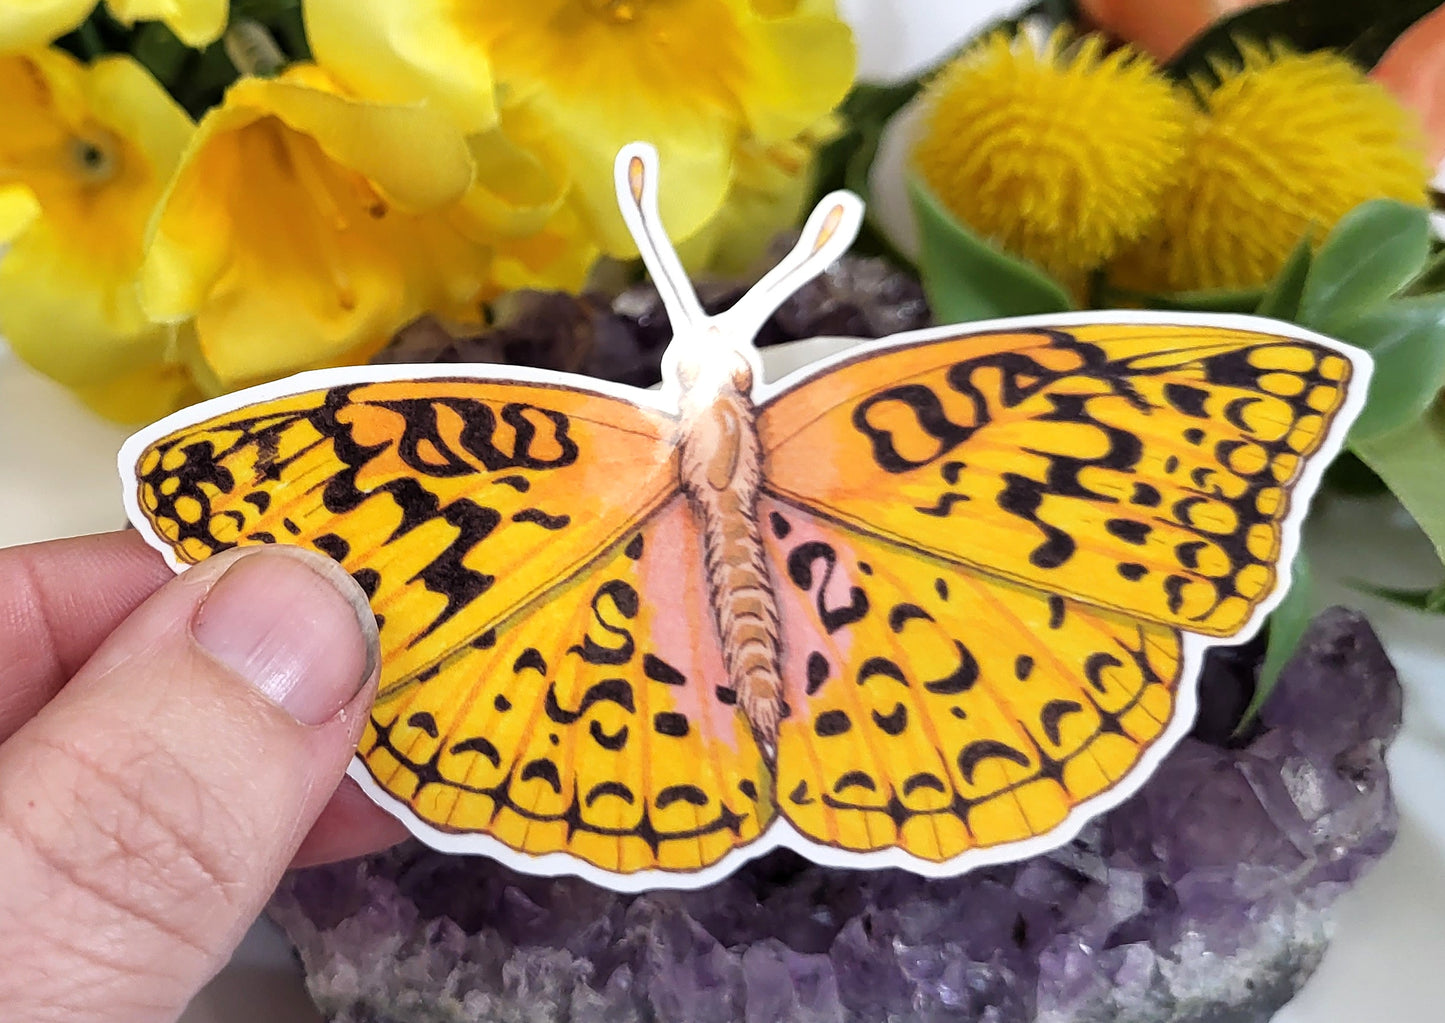 Aphrodite Flitterary Butterfly Vinyl Sticker